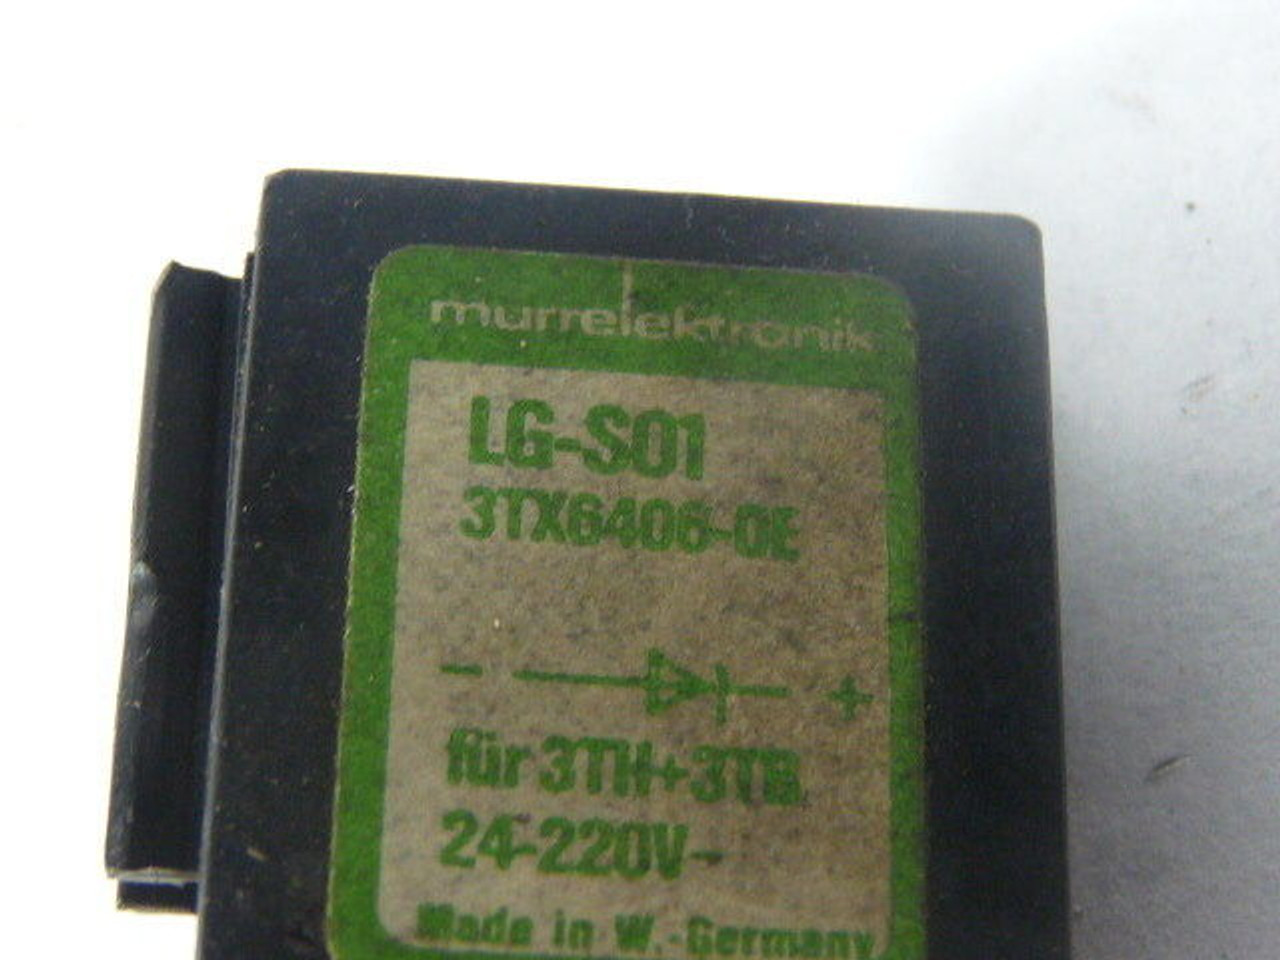 Murrelektronik LG-S01 Surge Suppressor 24-220V USED